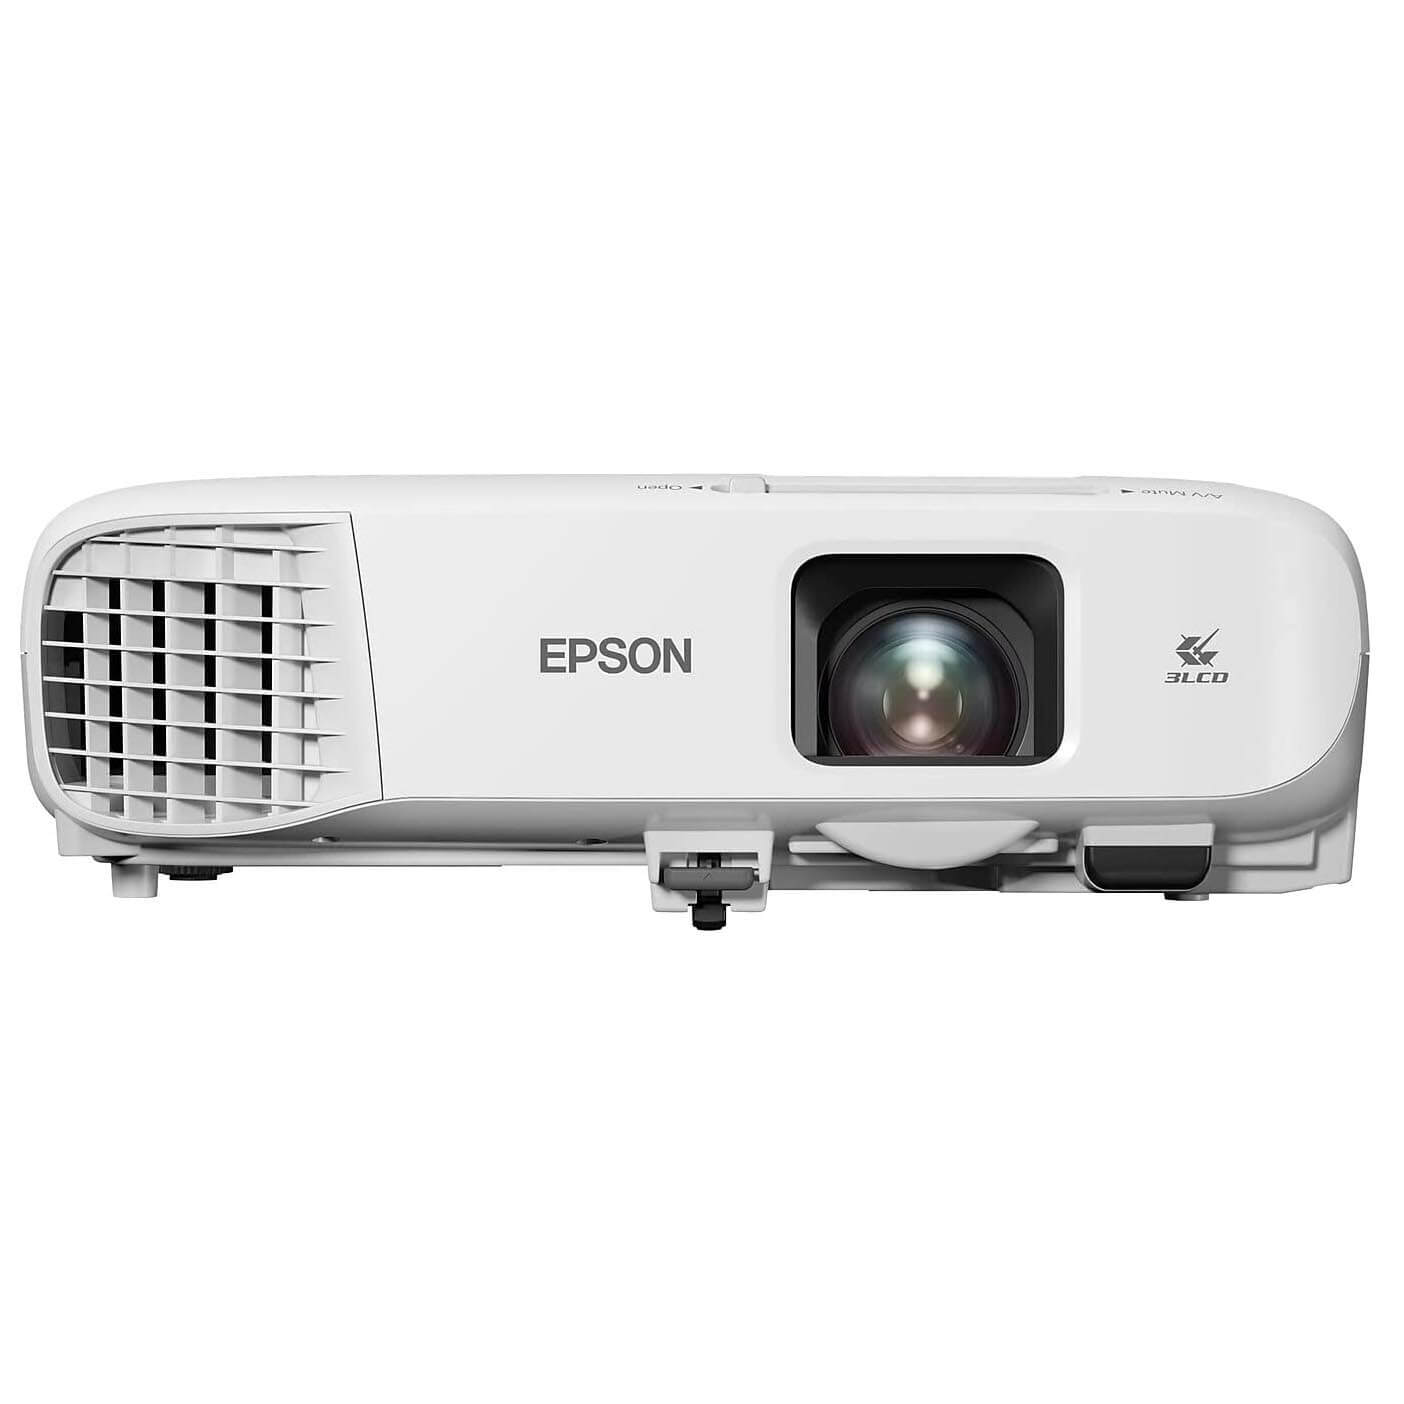 Проектор Epson EB-982W, белый проектор epson eb 982w 3lcd 1280x800 4200лм